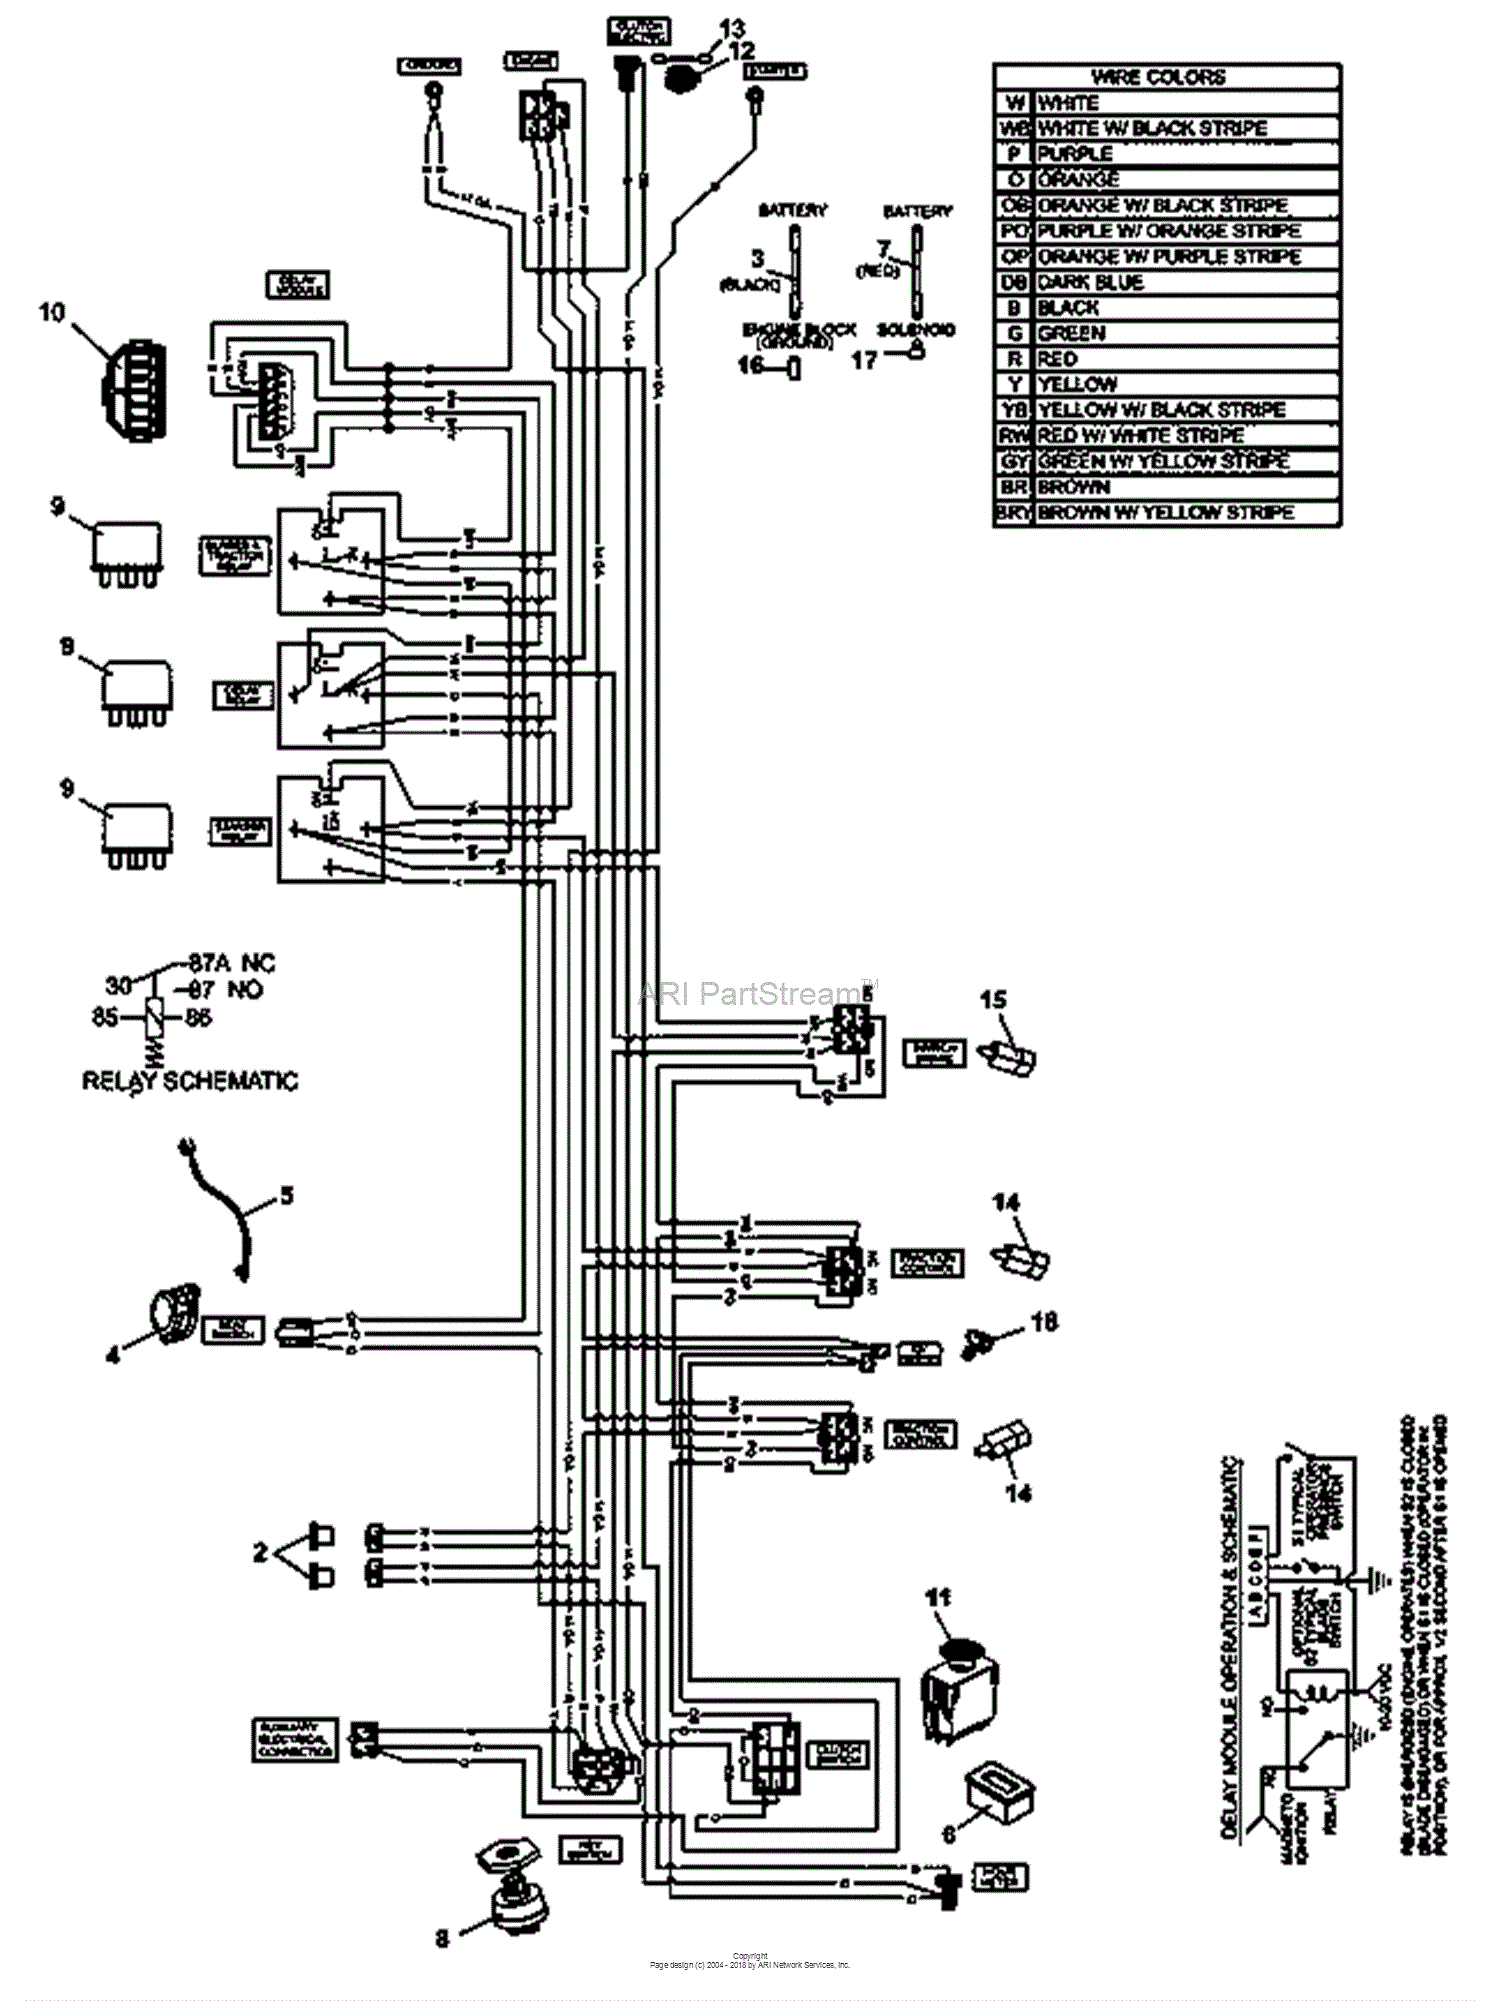 Bunton Bobcat Ryan 942220e Zt 219 19hp Kaw W 48 Side Discharge Parts Diagram For Kawasaki Wire Harness